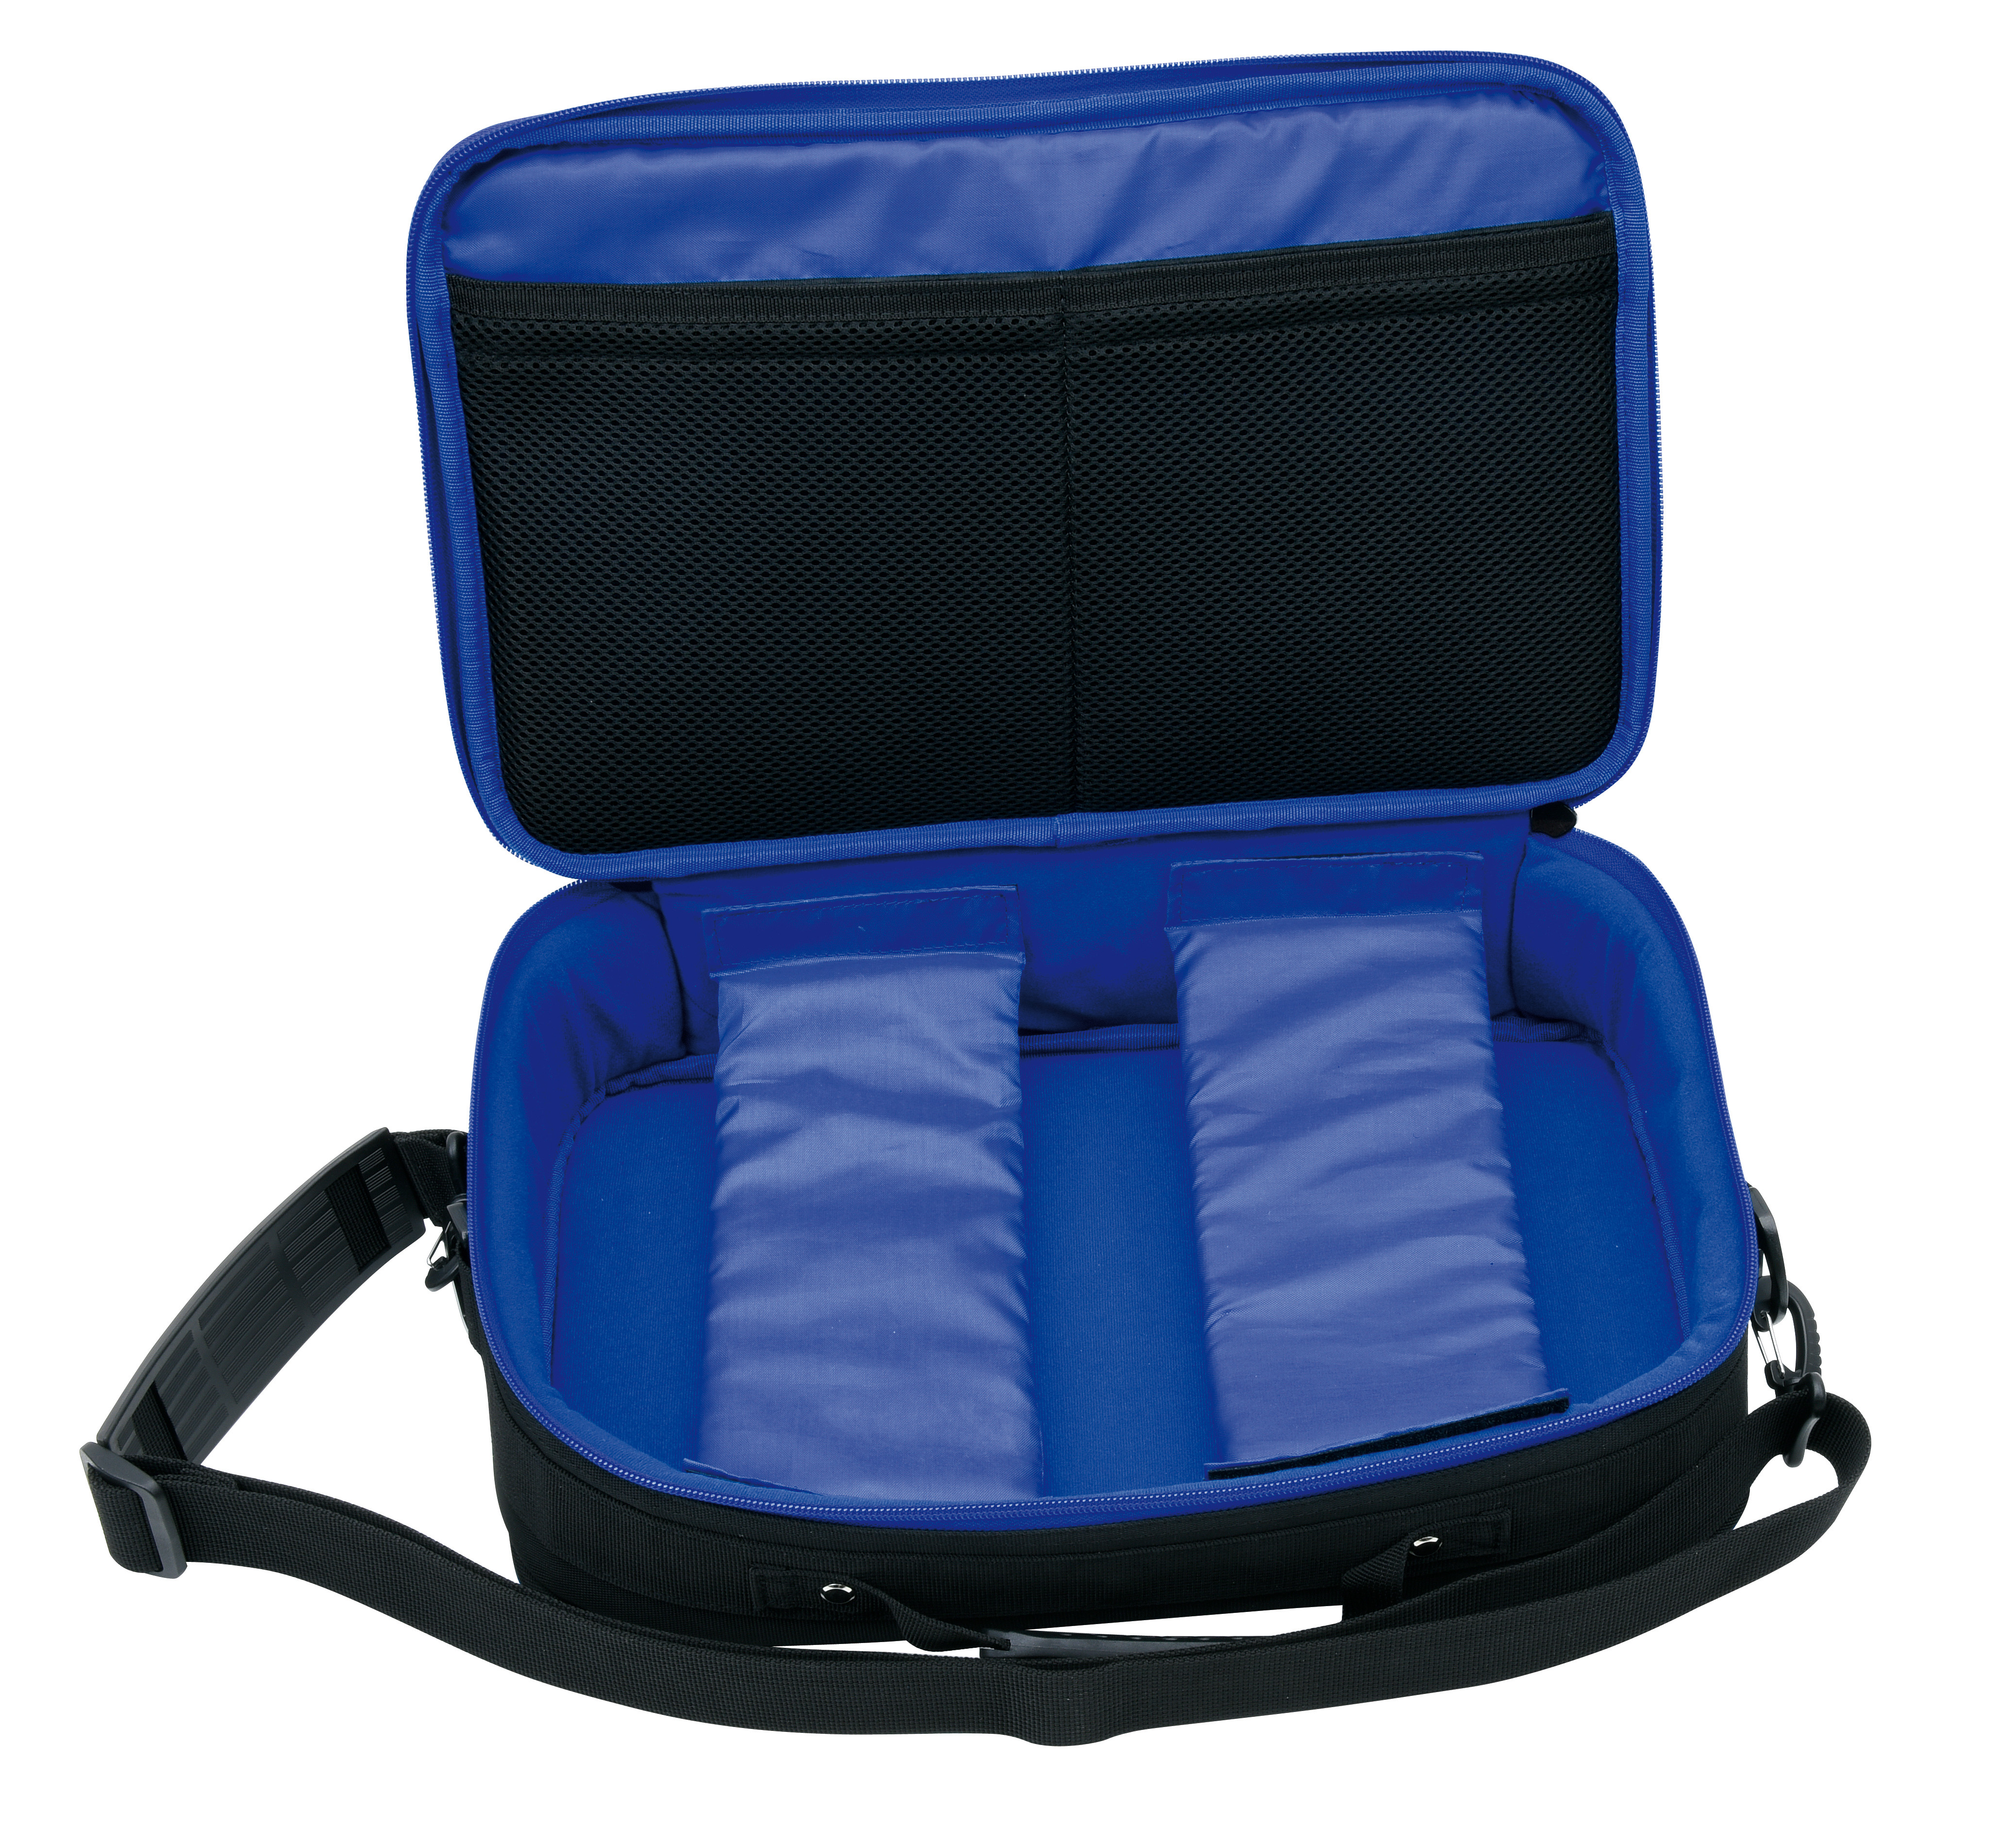 Lowrance Protective Sonar Bag 12 Devices